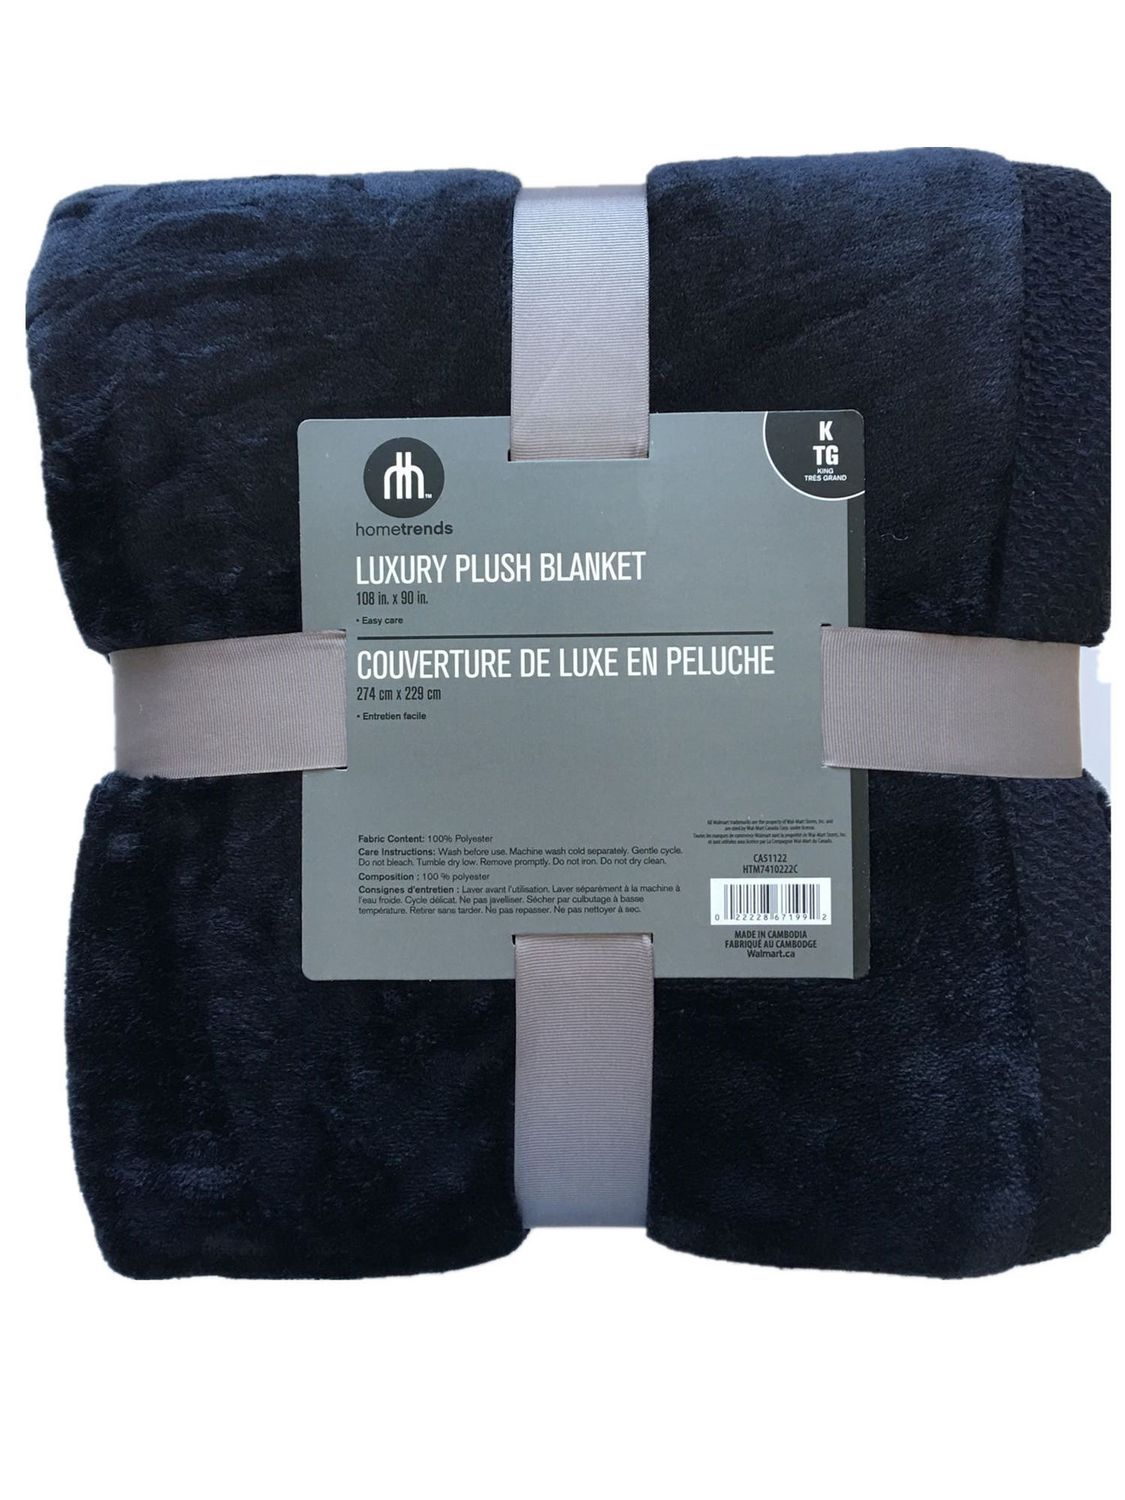 hometrends Luxury Plush Blanket | Walmart Canada